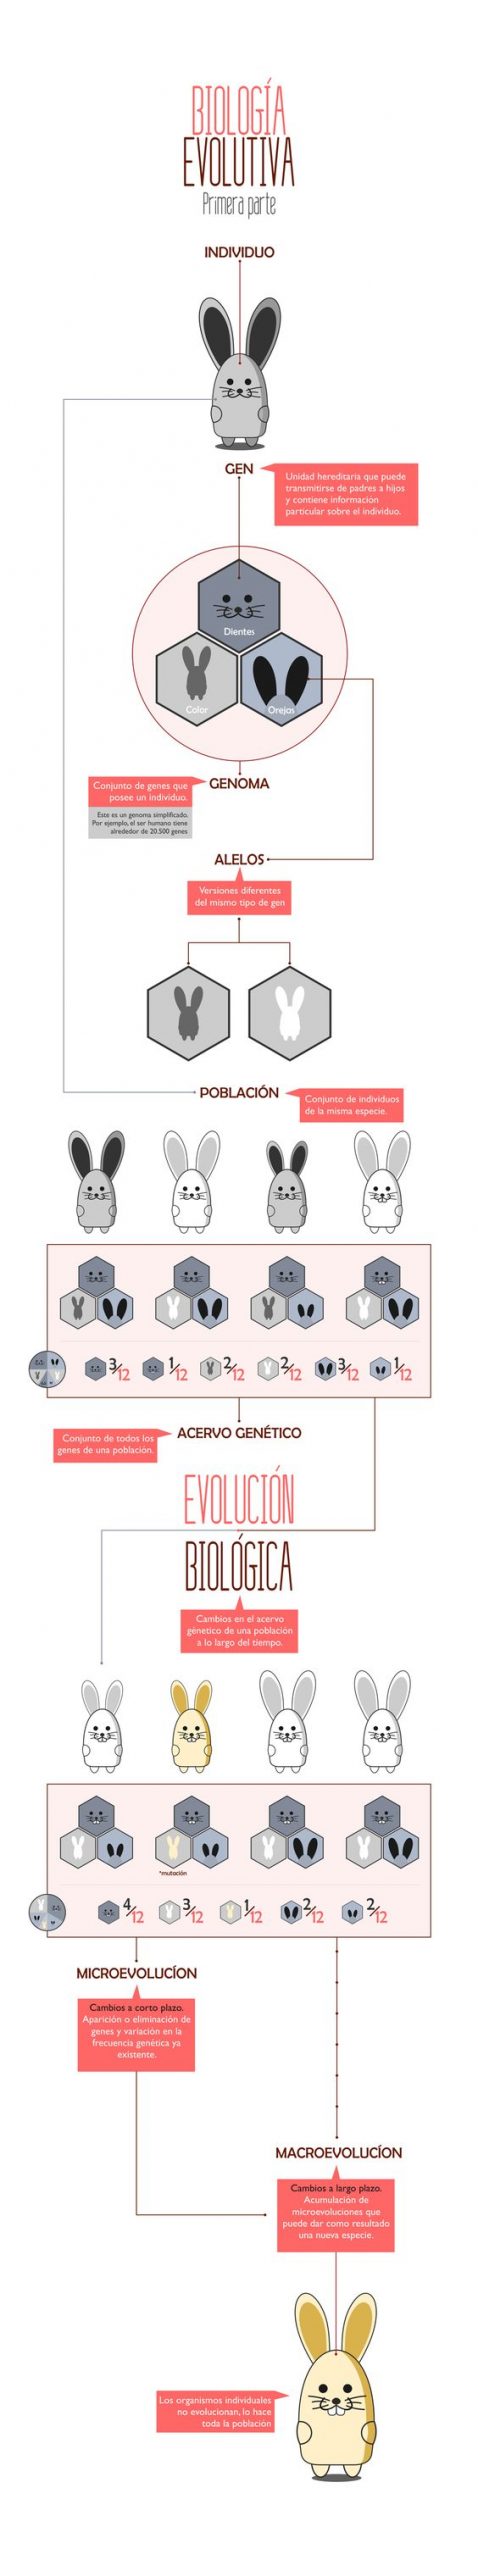 infografía_evolucion_biologica